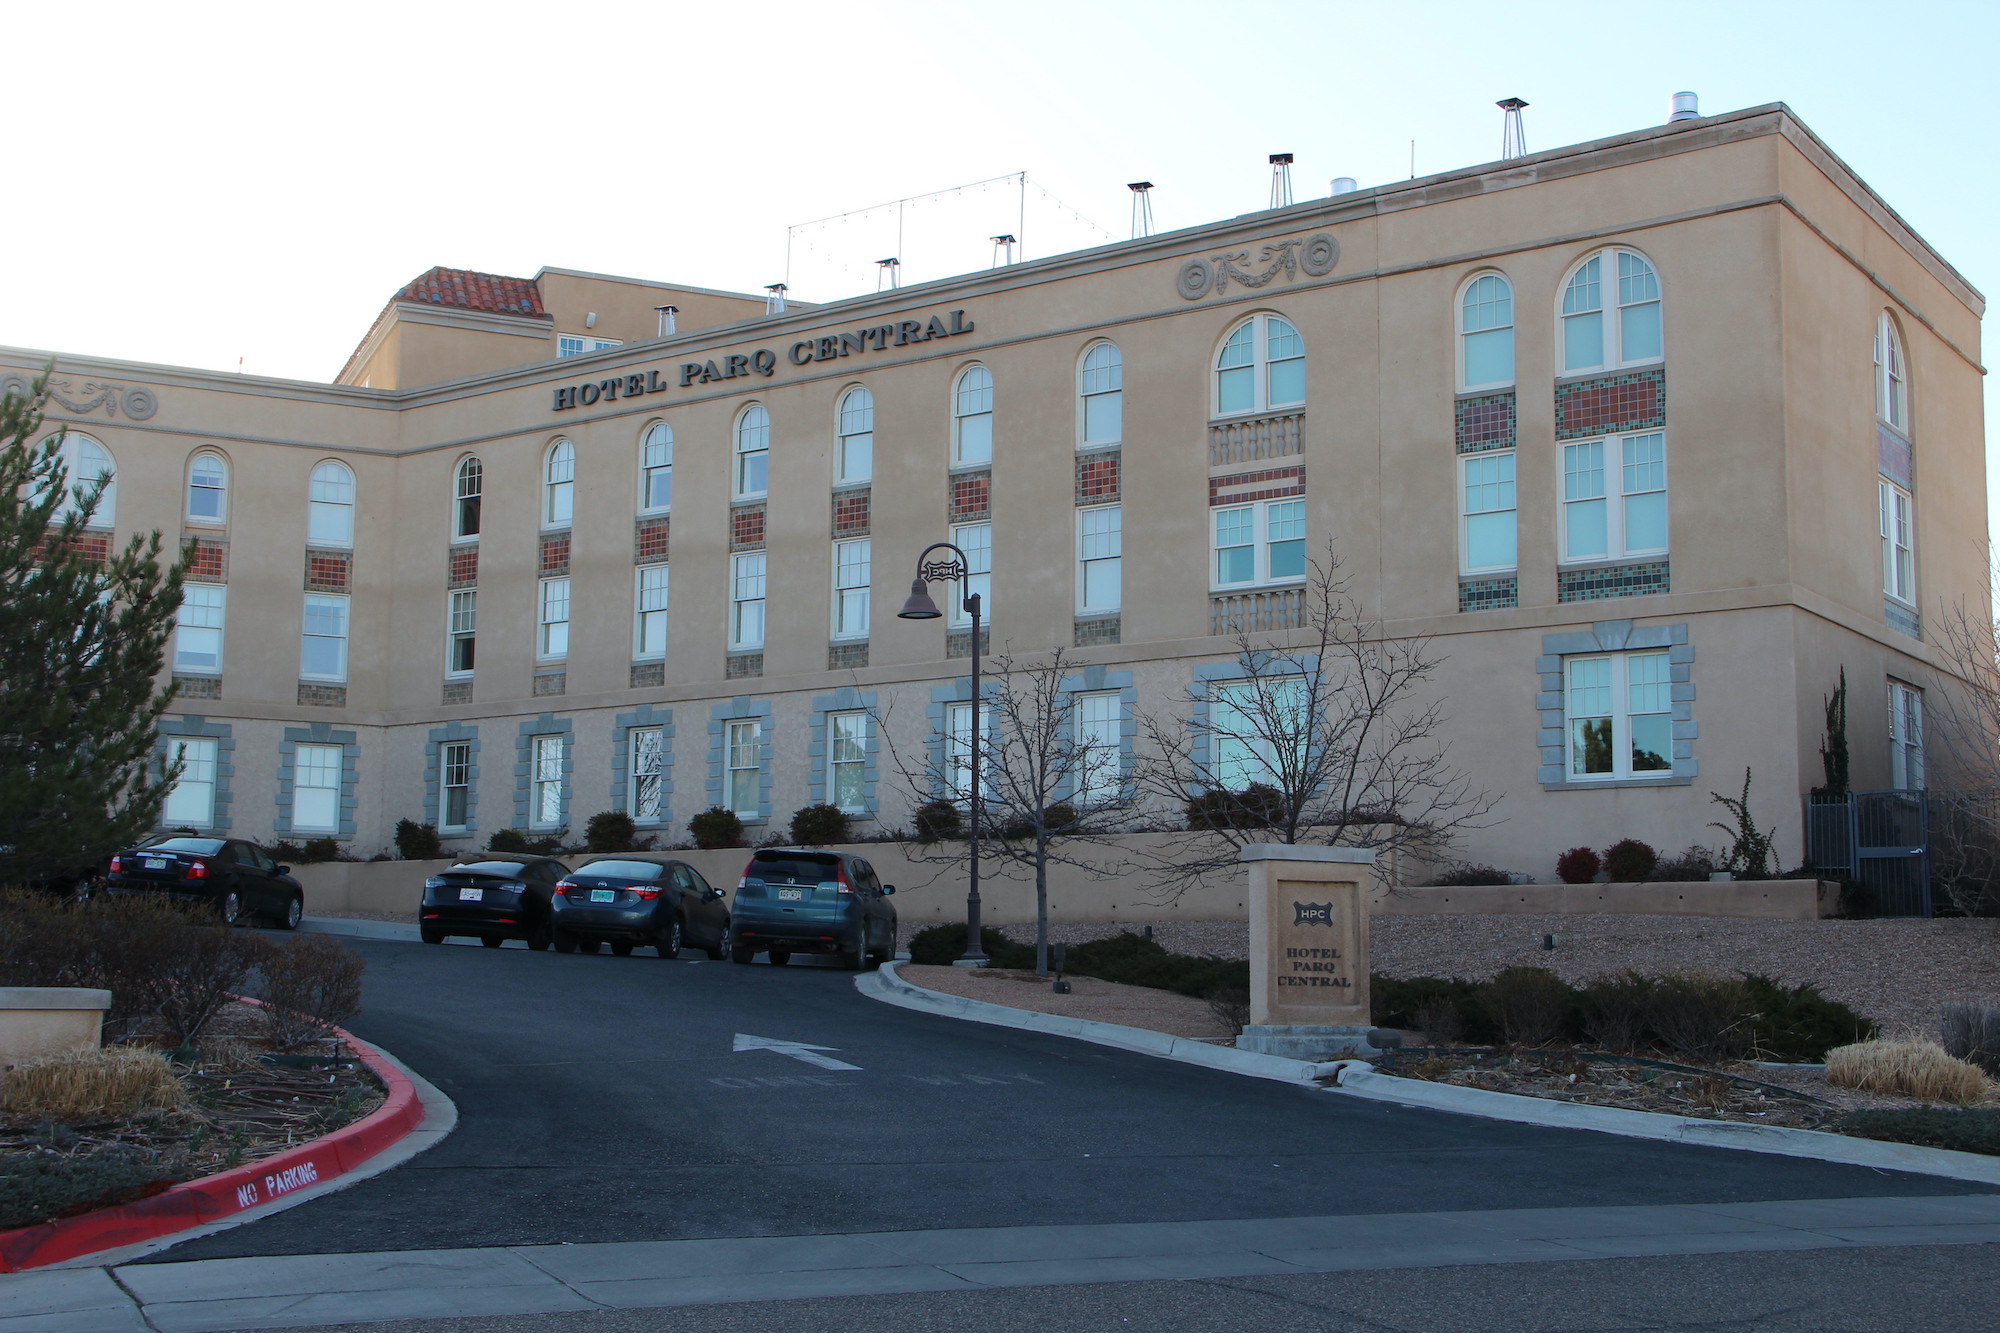 Picture of Hotel Parq Central 806 Central Ave SE, Albuquerque, NM 87102, United States